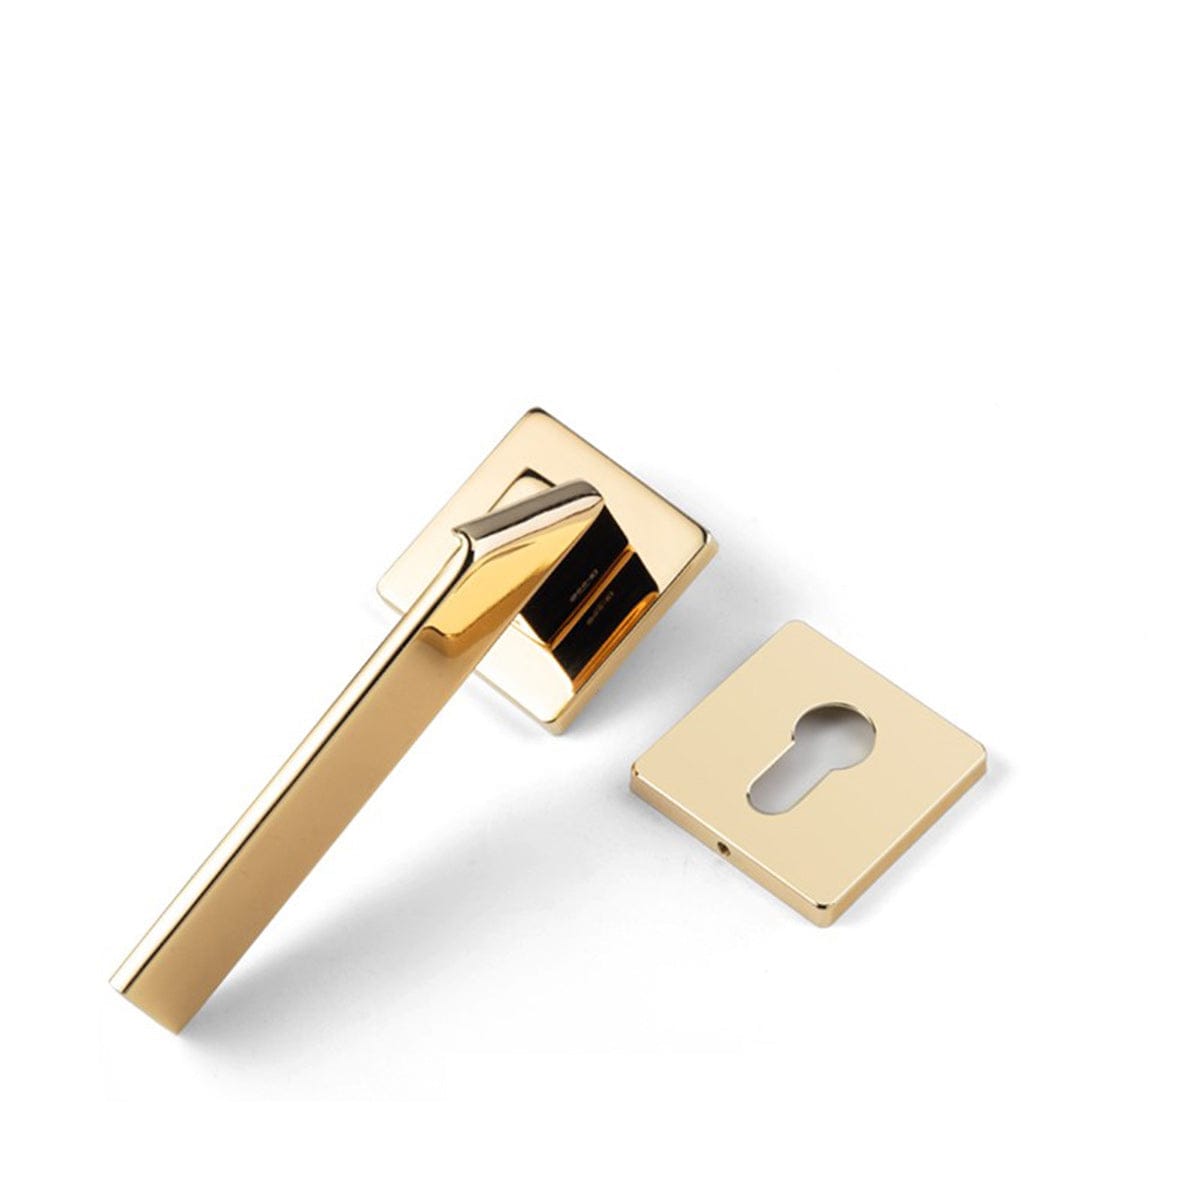 Goo-Ki Polished Gold / Fake Lock Square Space Folding Door Lock Minimalist Interior Door Security Mute Door Lock